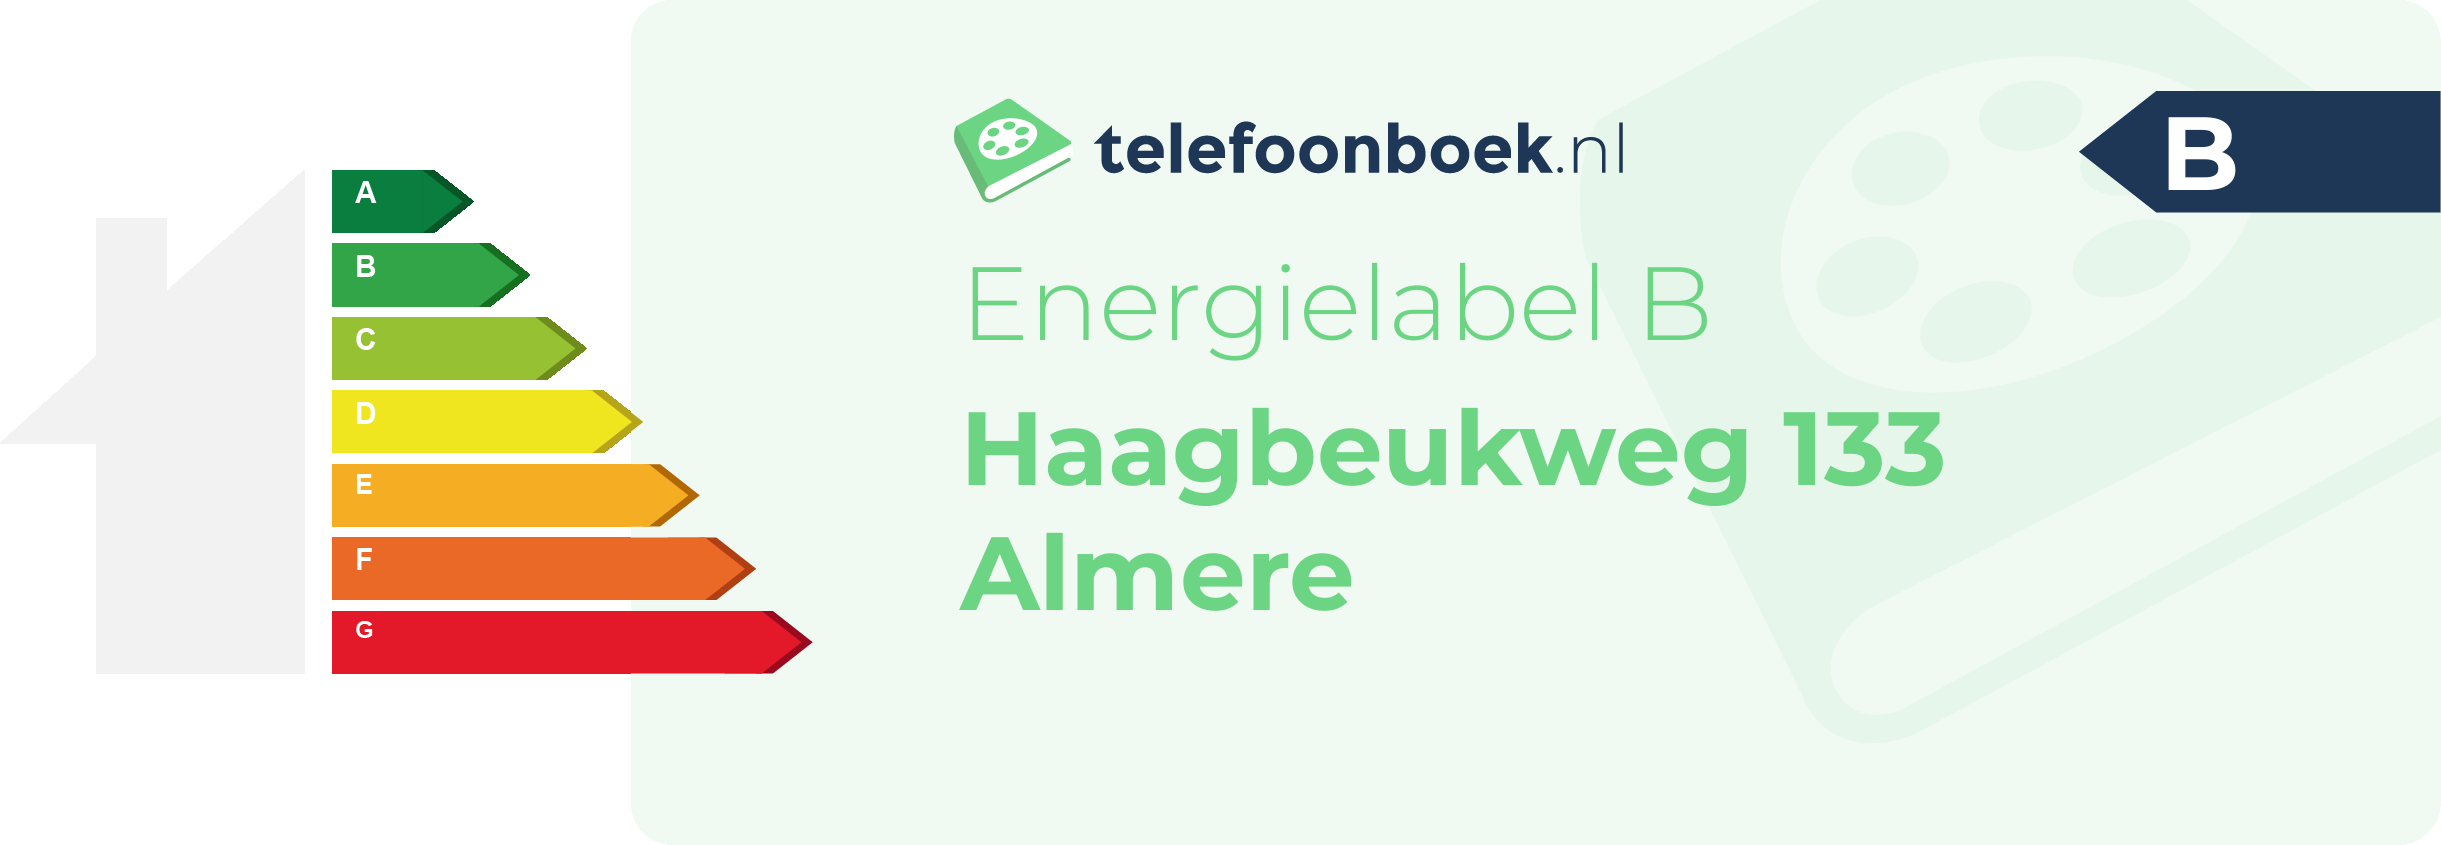 Energielabel Haagbeukweg 133 Almere